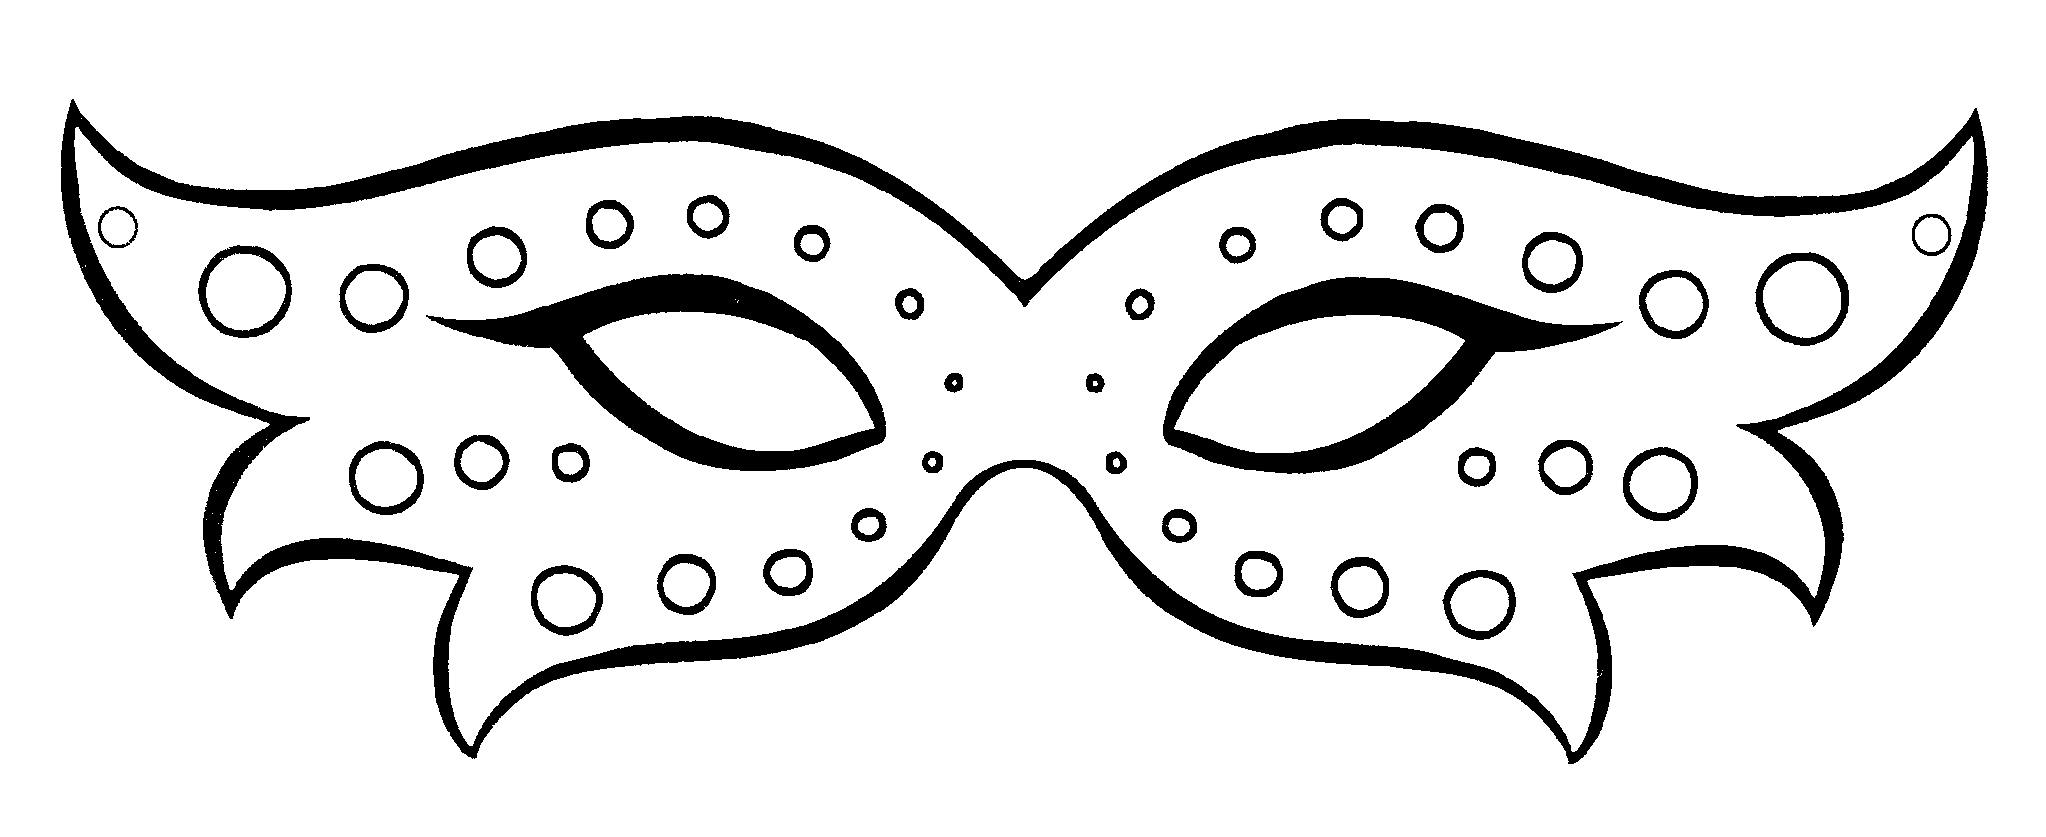 molde para fazer máscara - Pesquisa Google | Máscaras de carnaval infantil,  Mascaras de carnaval, Carnaval para colorir